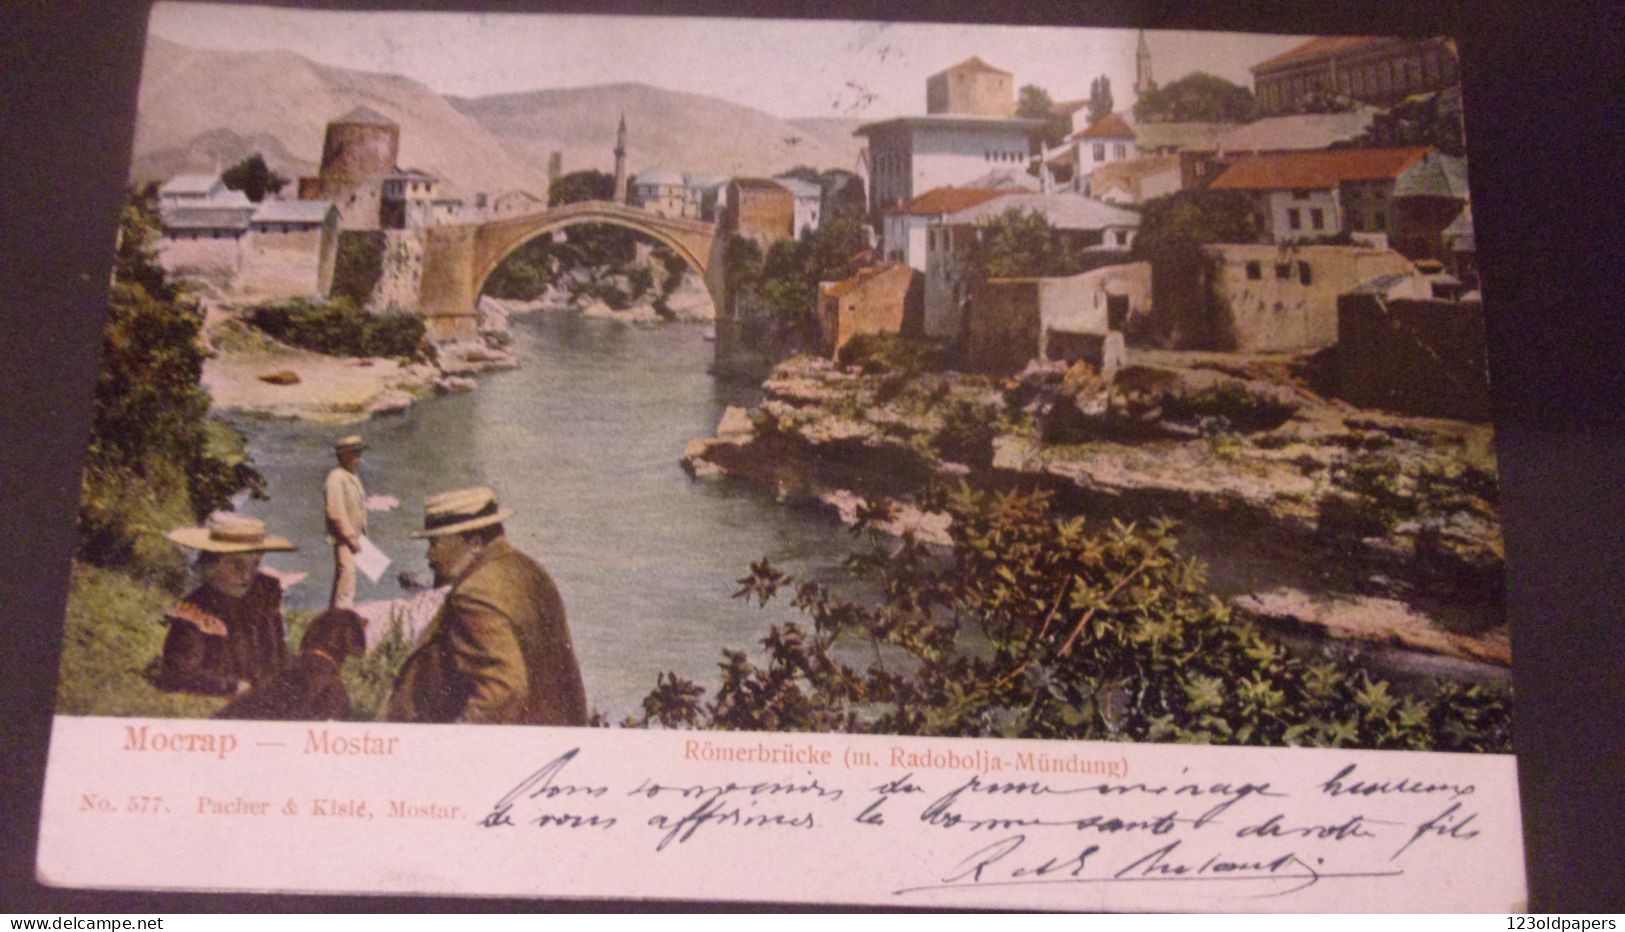 BOSNIA & HERZEGOVINA - BOSNA - MOSTAR 1905 ROMERBRUCKE RADOBOLJA MUNDUNG EDIT PACHER KISIE - Bosnien-Herzegowina